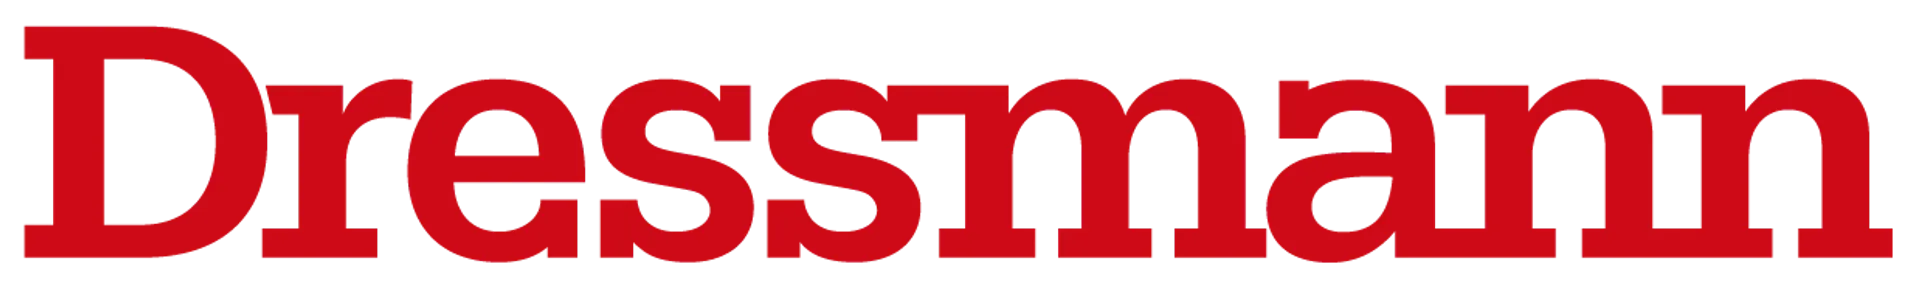 DRESSMANN logo die aktuell Flugblatt